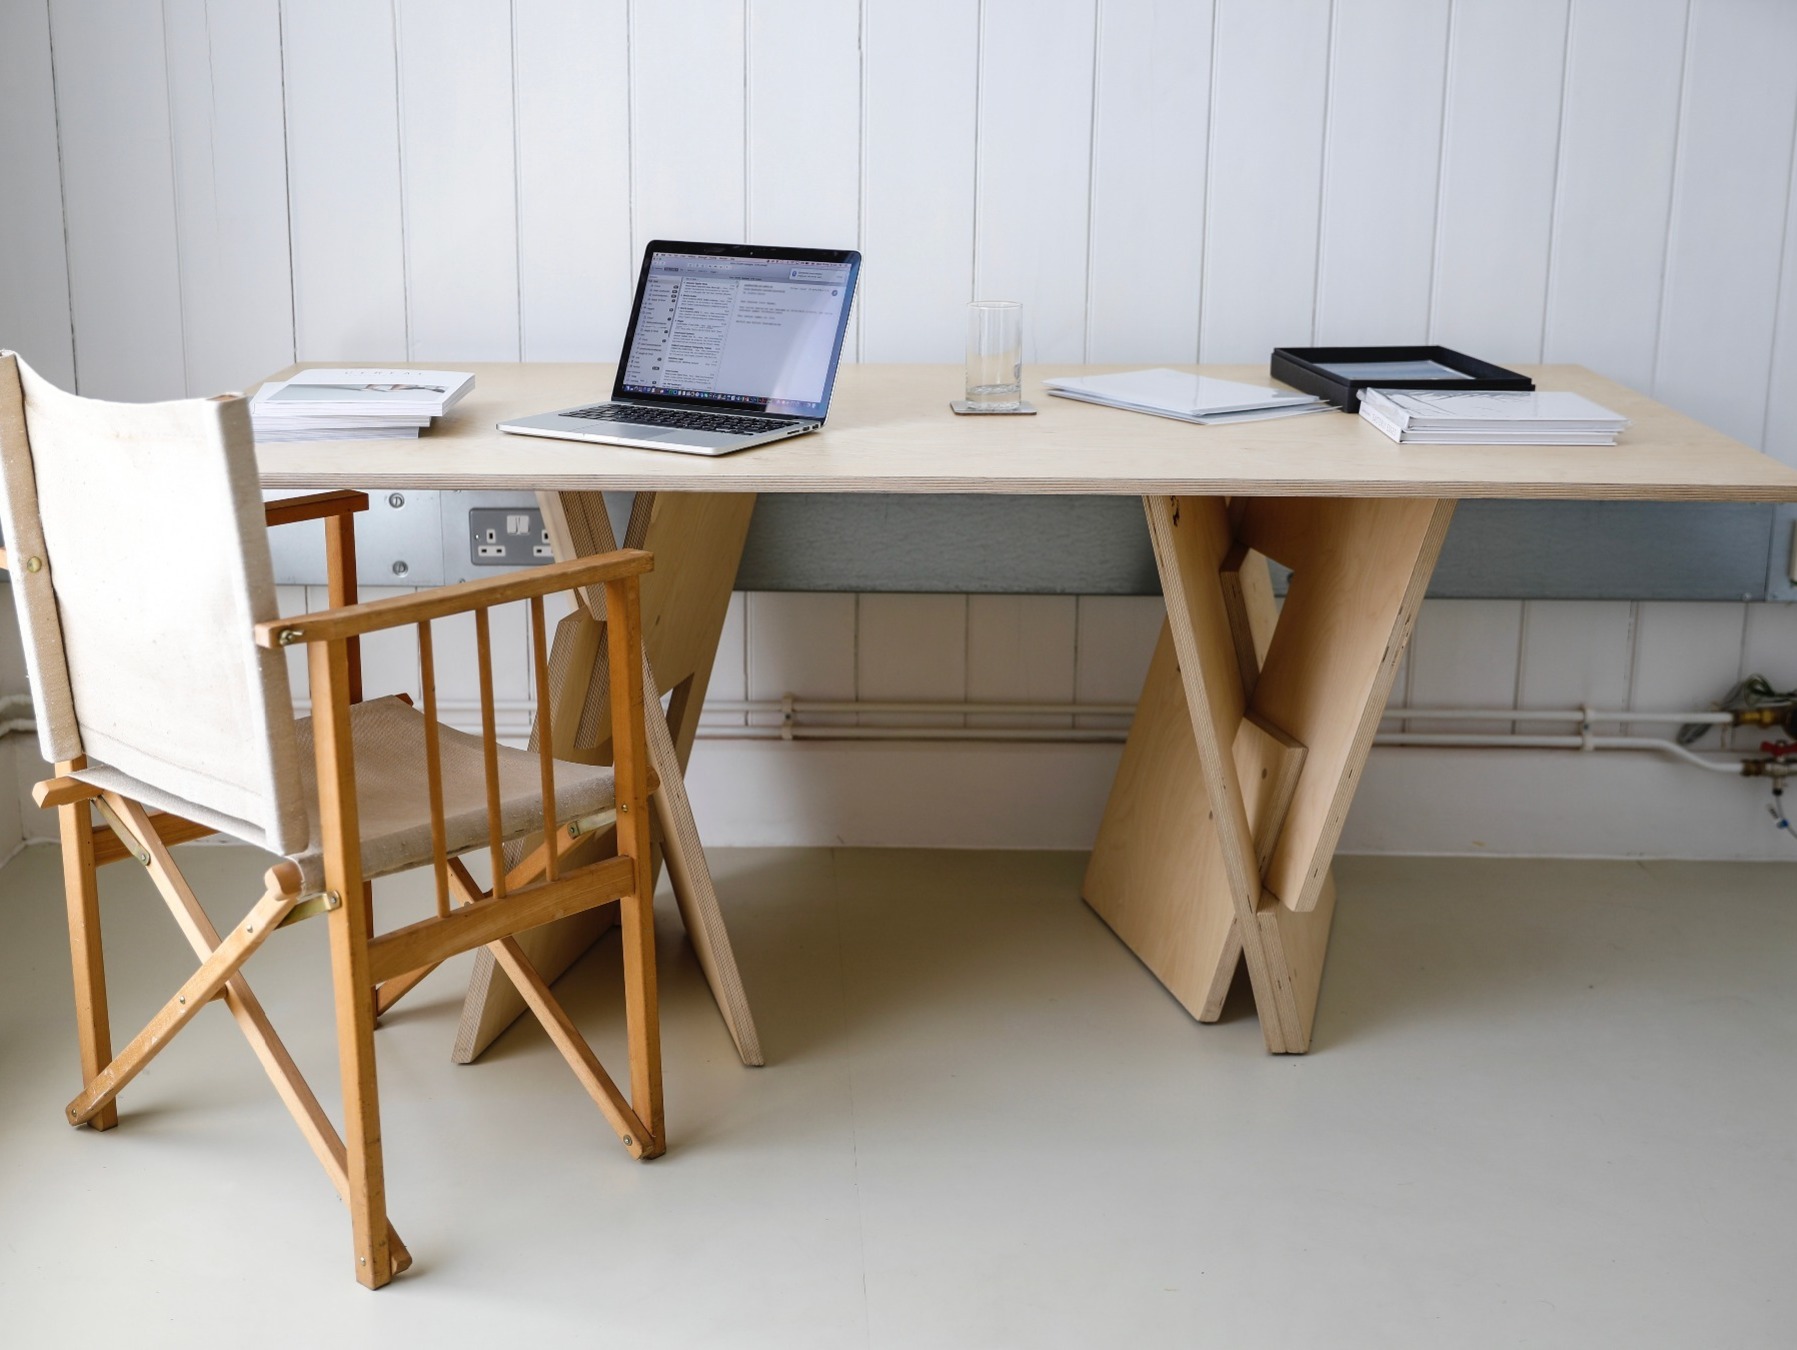 Tim Germain - Trestle Table in birch ply, inspired by Quadror children's building blocks